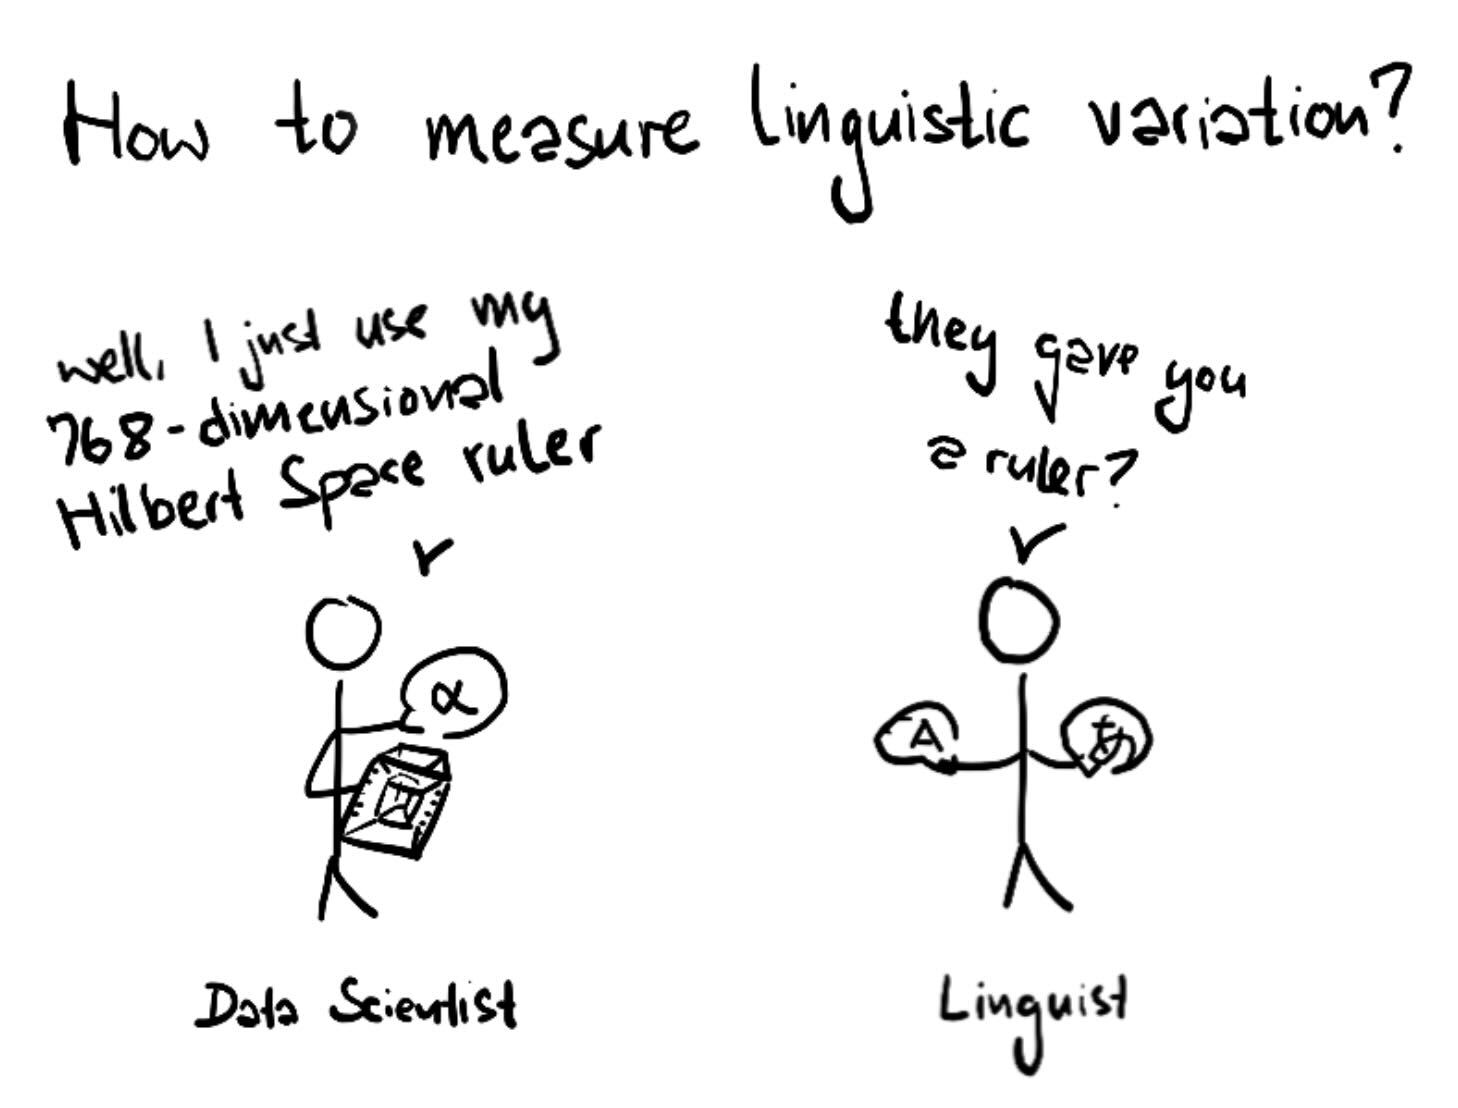 Linguistic variation and NLP. Credits: Max Mueller-Eberstein